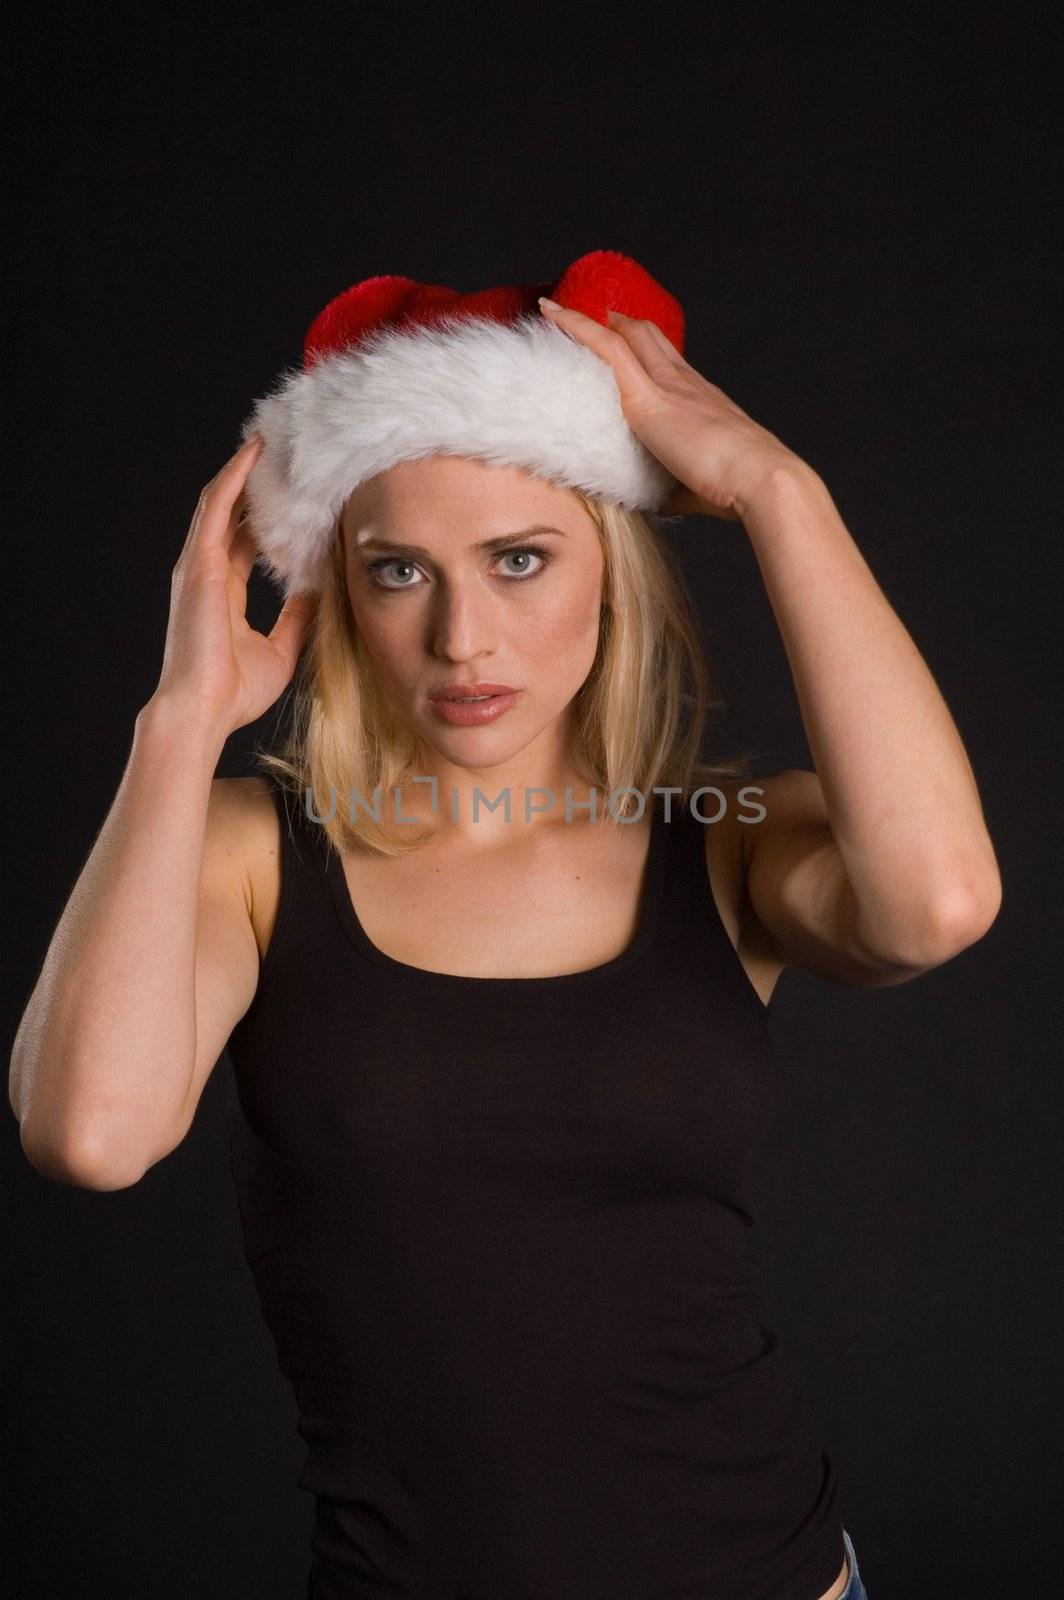 Santa's helper putting on her hat